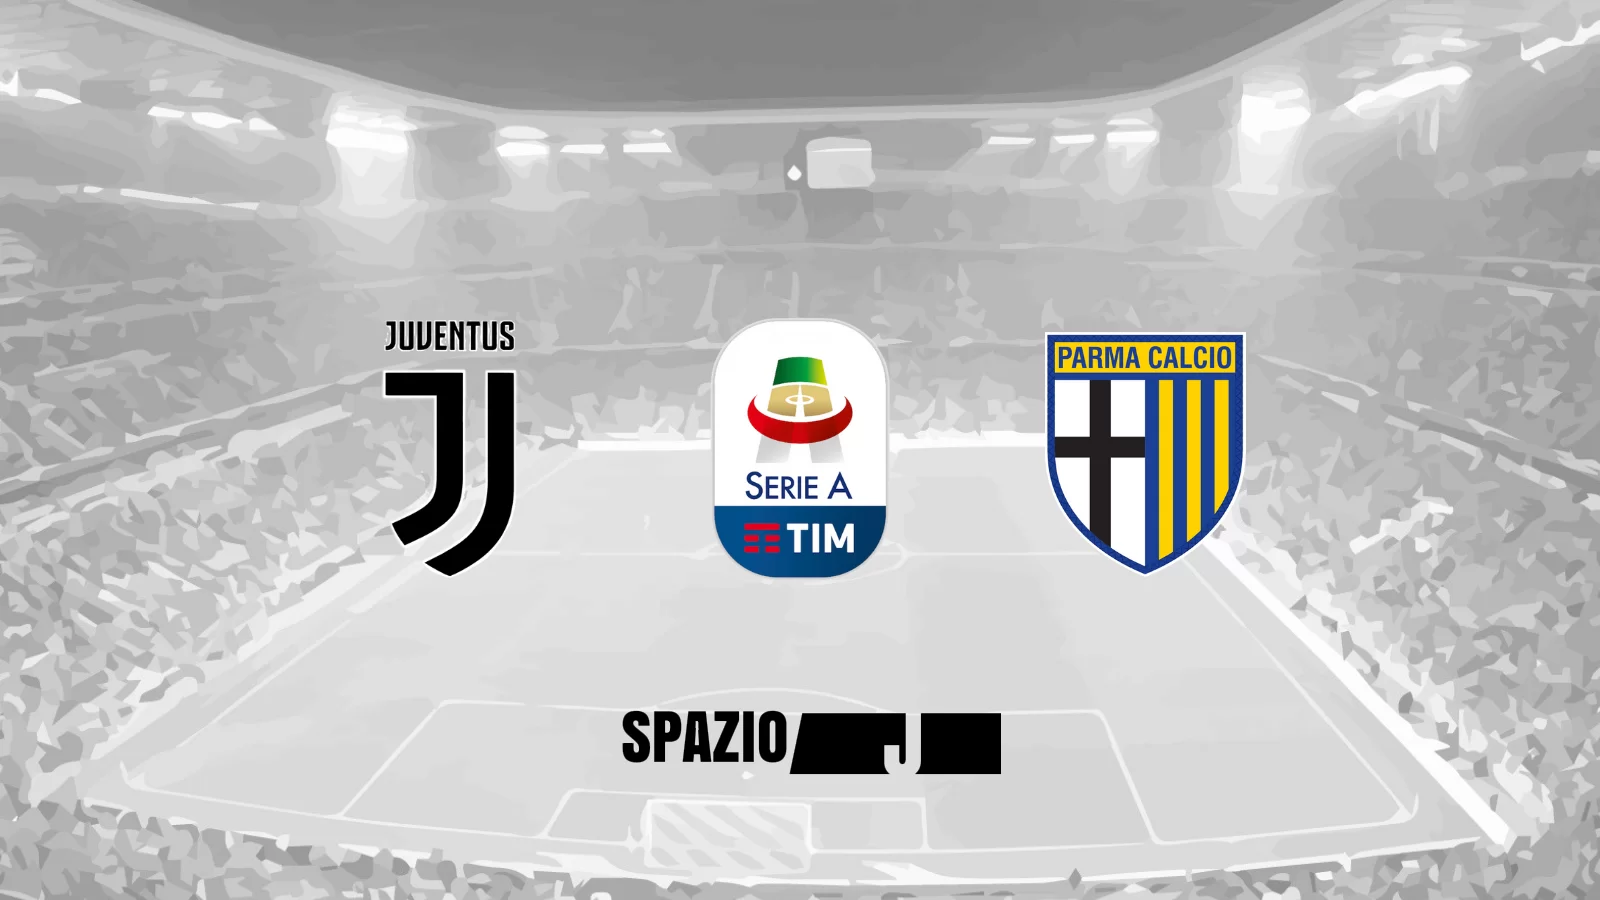 ReLIVE | Juventus-Parma 3-3: finisce così allo Stadium, clamoroso harakiri dei Bianconeri!